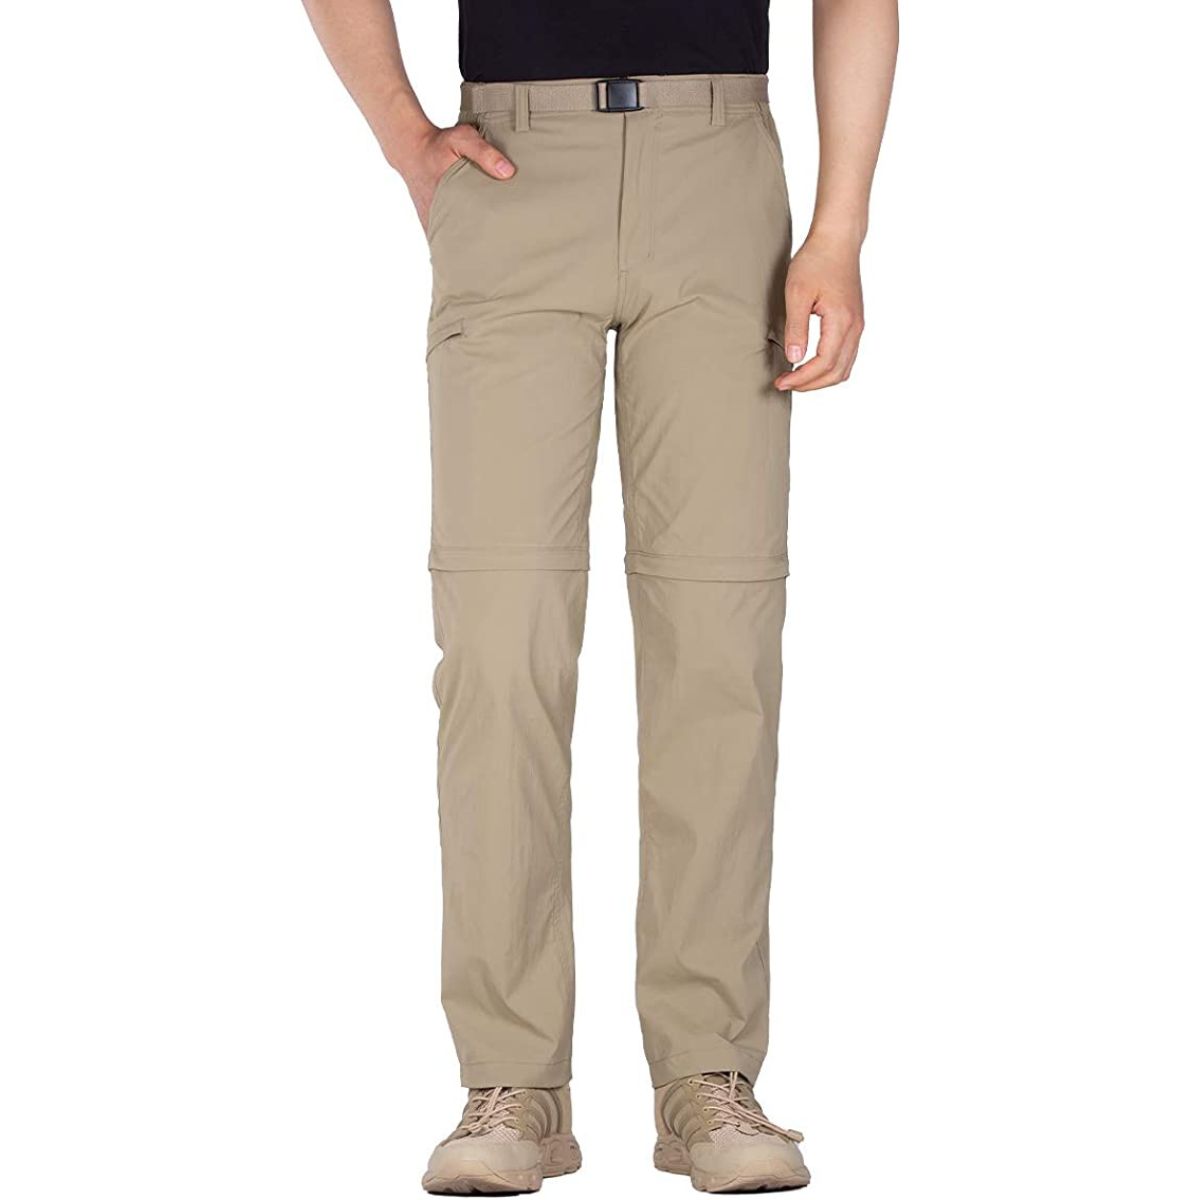 HARD LAND Men's Belted Hiking Pants Convertible Zipper Cuff India